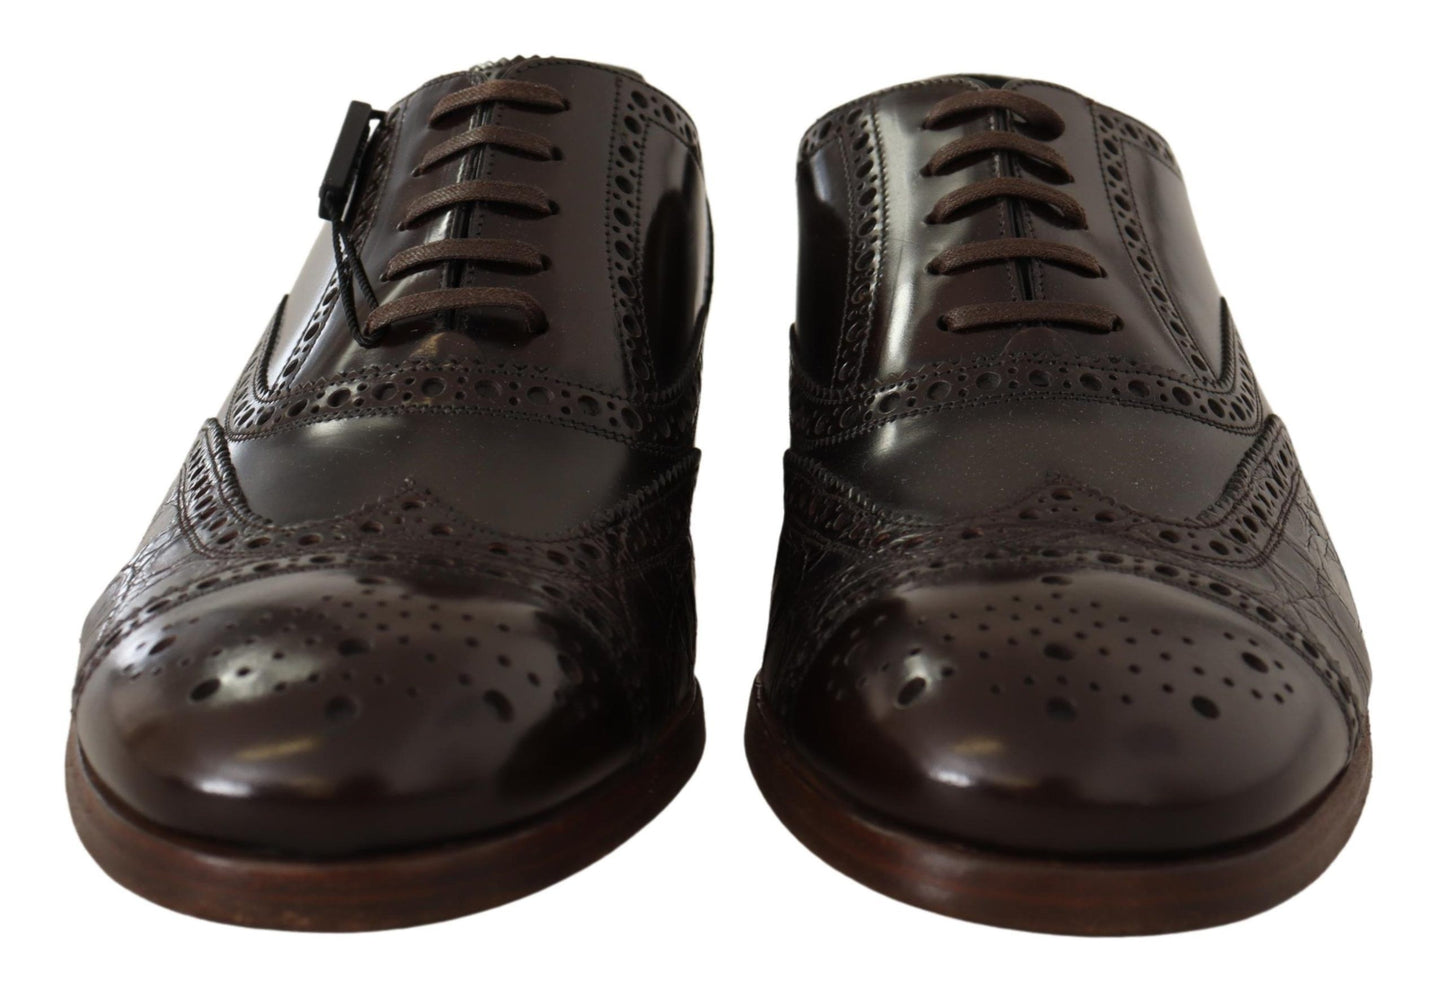 Elegant Brown Leather Derby Brogue Formal Shoes